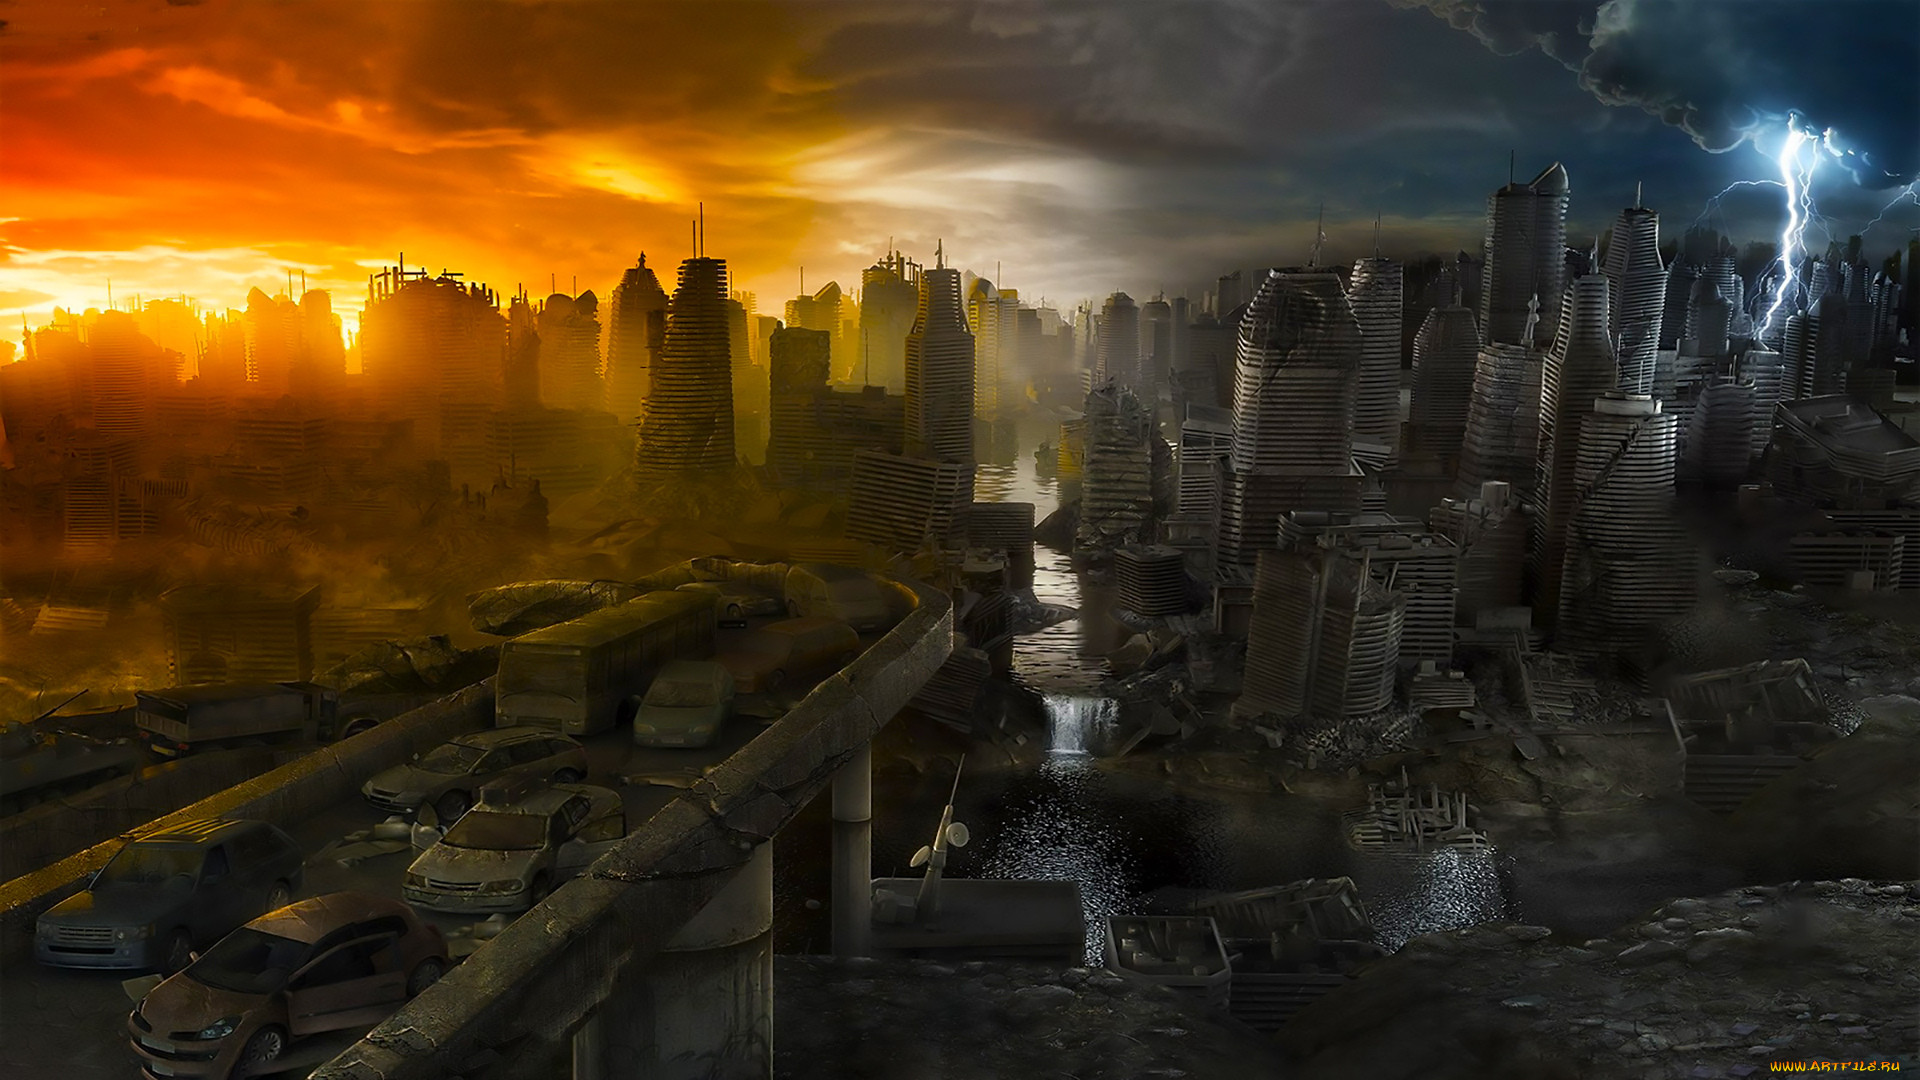 Реинкарнация в начало апокалипсиса 7. Разрушенный город. Город после апокалипсиса. Разрушенный город будущего. Конец света.